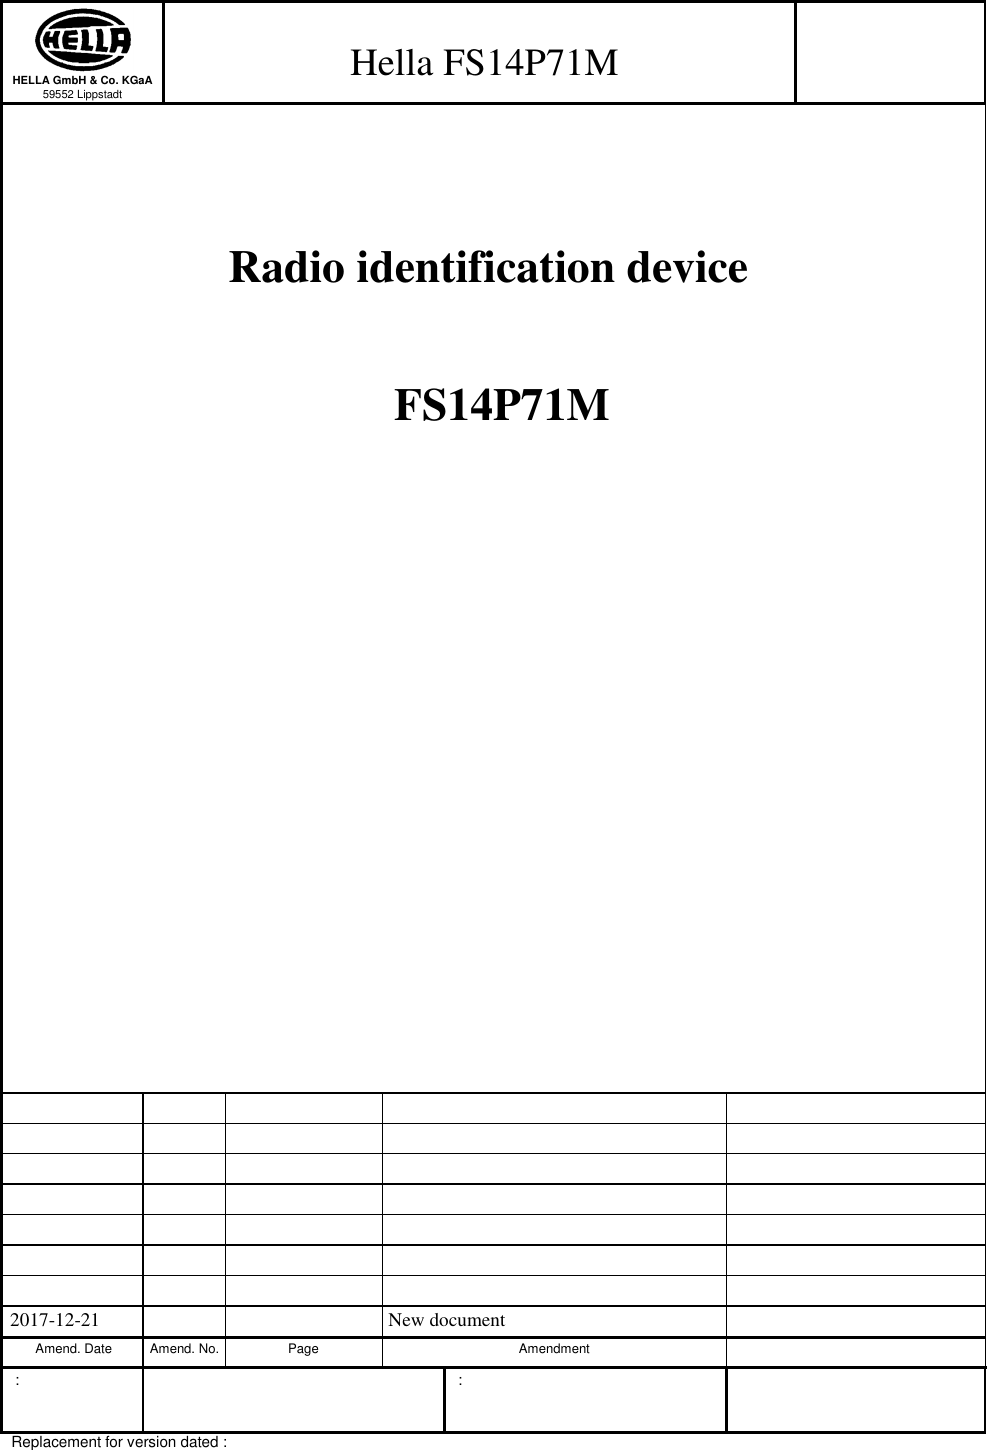   HELLA GmbH &amp; Co. KGaA 59552 Lippstadt      Hella FS14P71M          Radio identification device        FS14P71M                                                                               2017-12-21       New document    Amend. Date  Amend. No.  Page  Amendment    :           :     Replacement for version dated :     